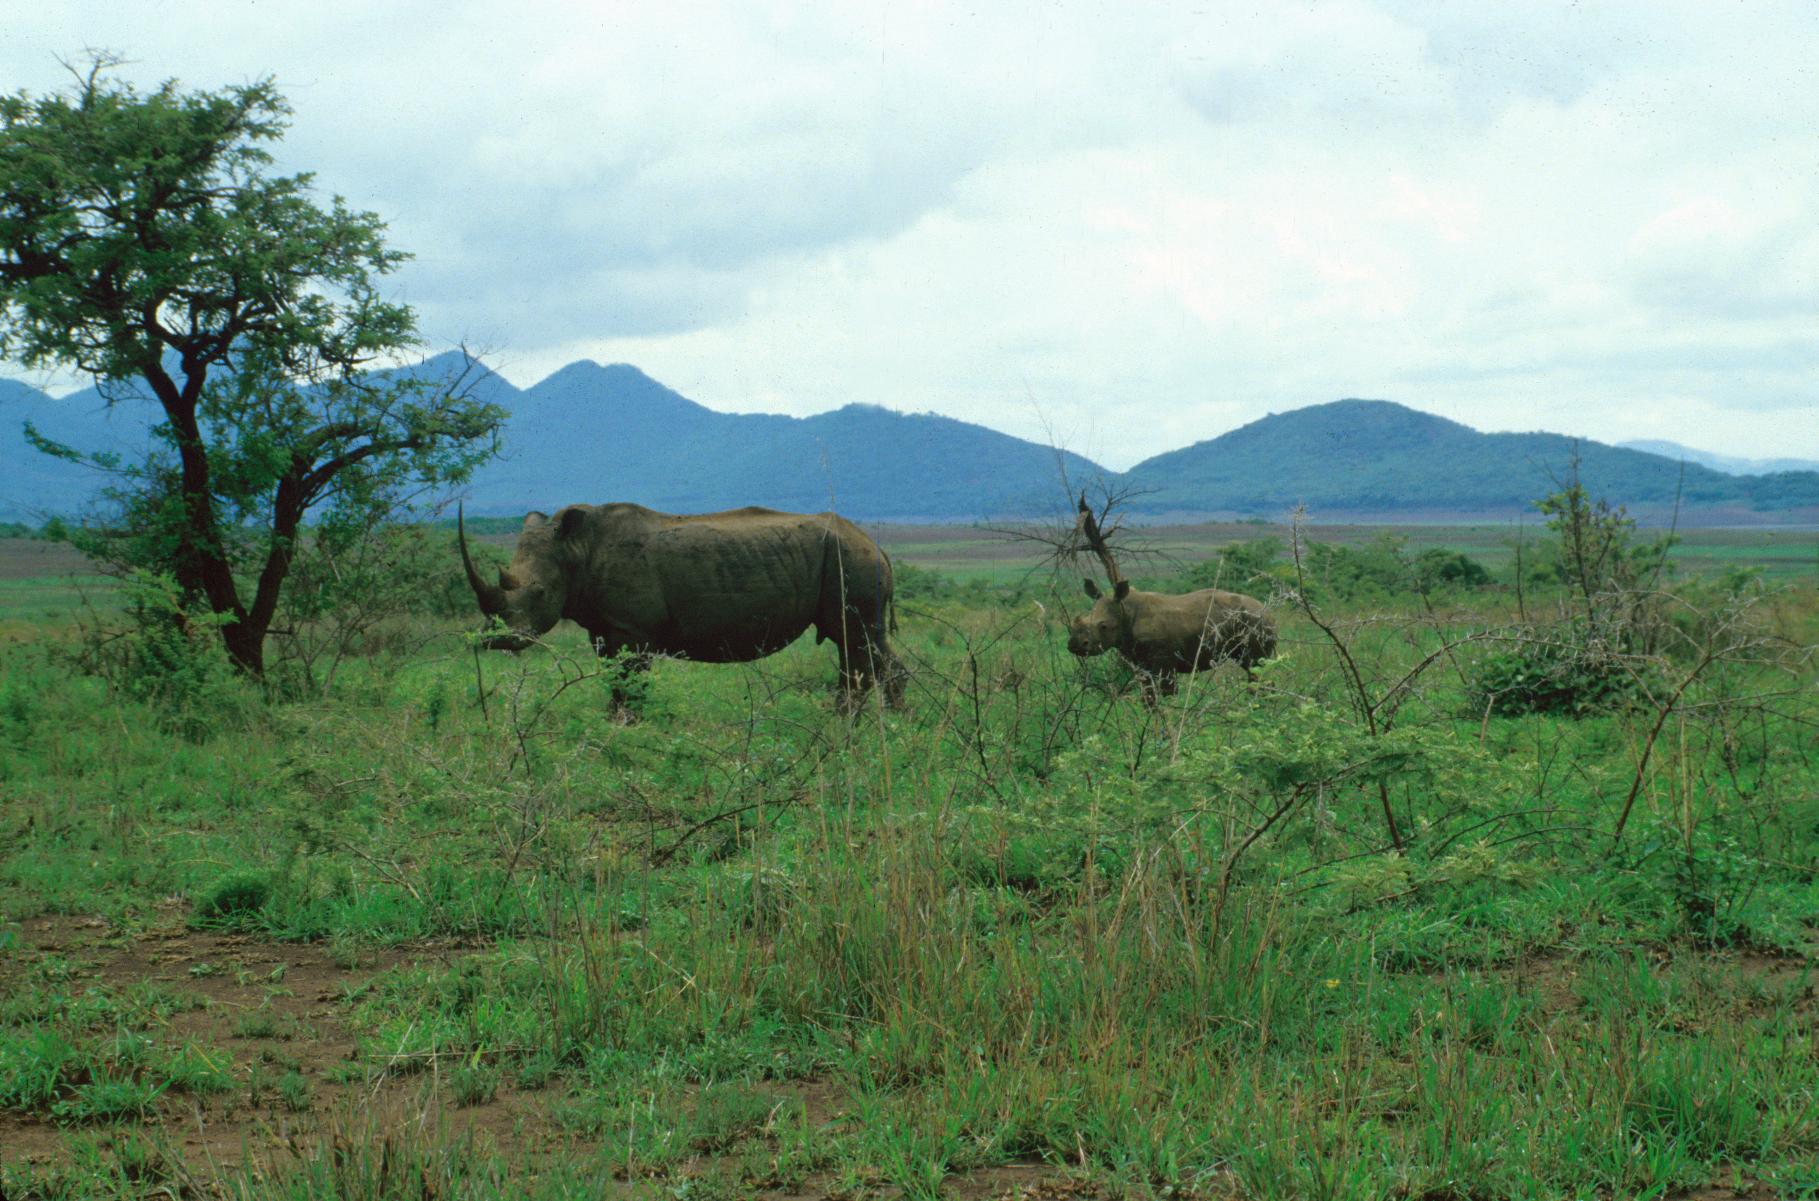 Black rhinoceroses